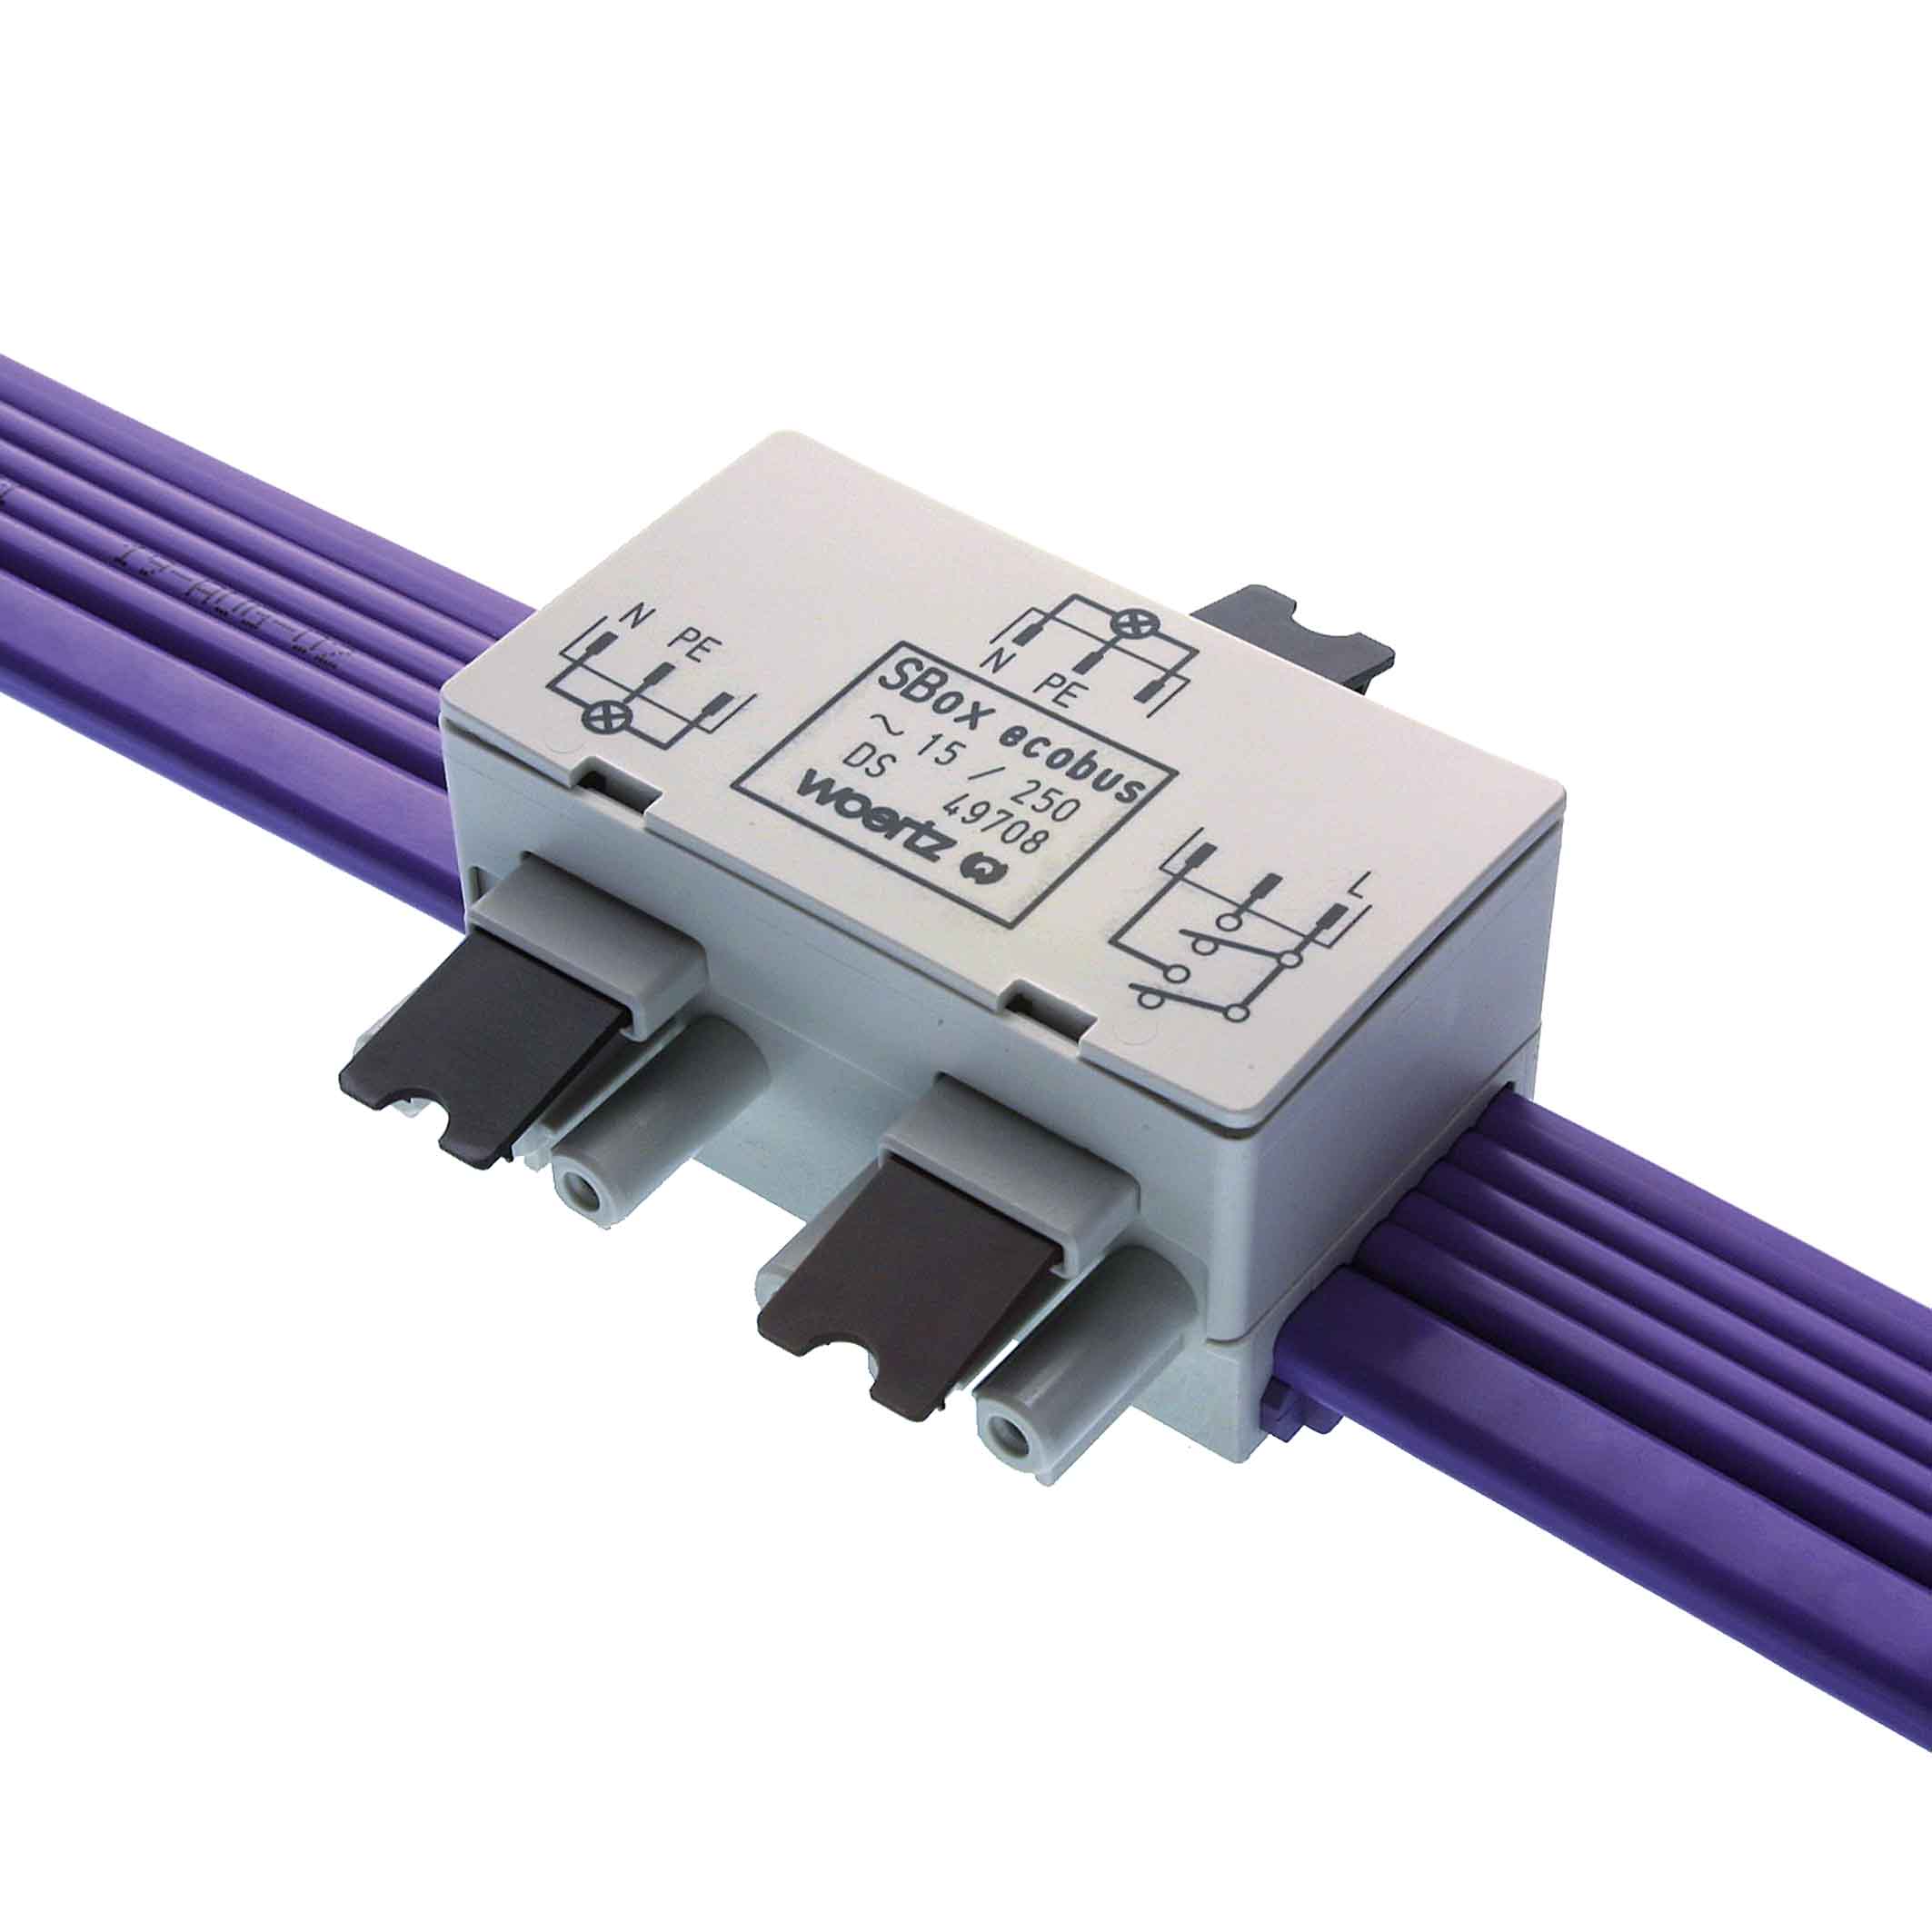 SBox luminaire circuit flat cable Combi